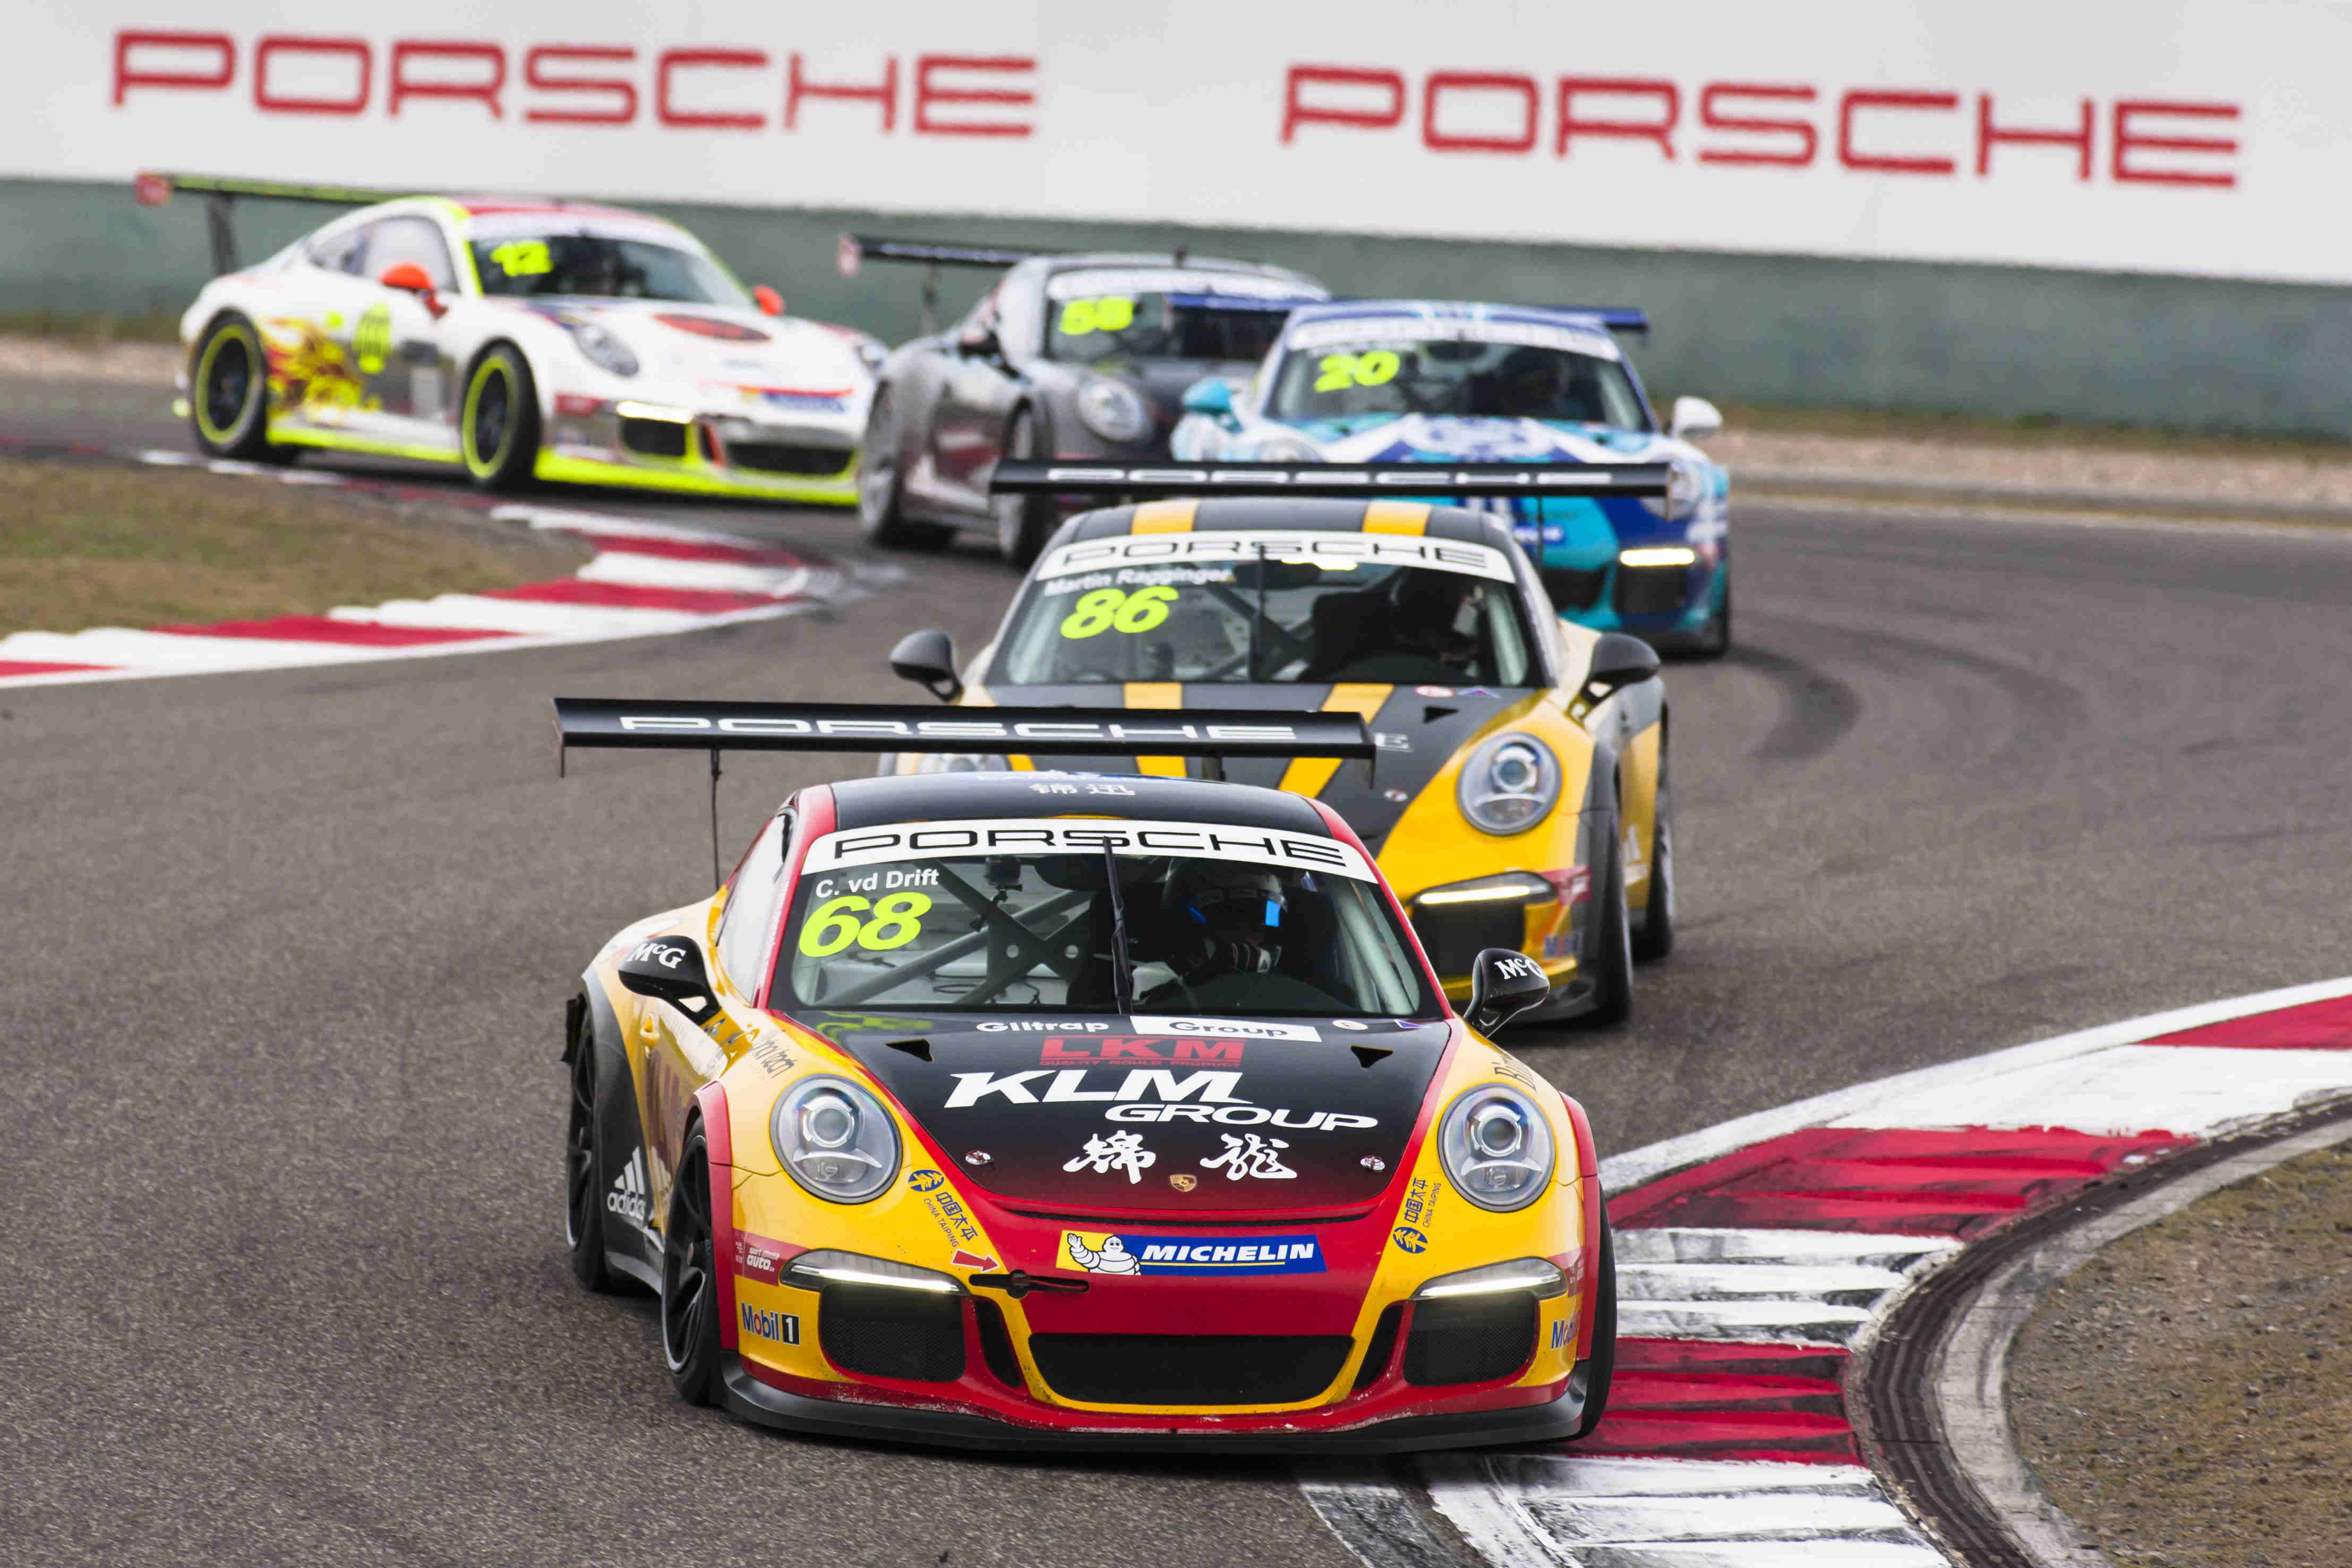 Van der Drift crowned 2015 Porsche Carrera Cup Asia Champion